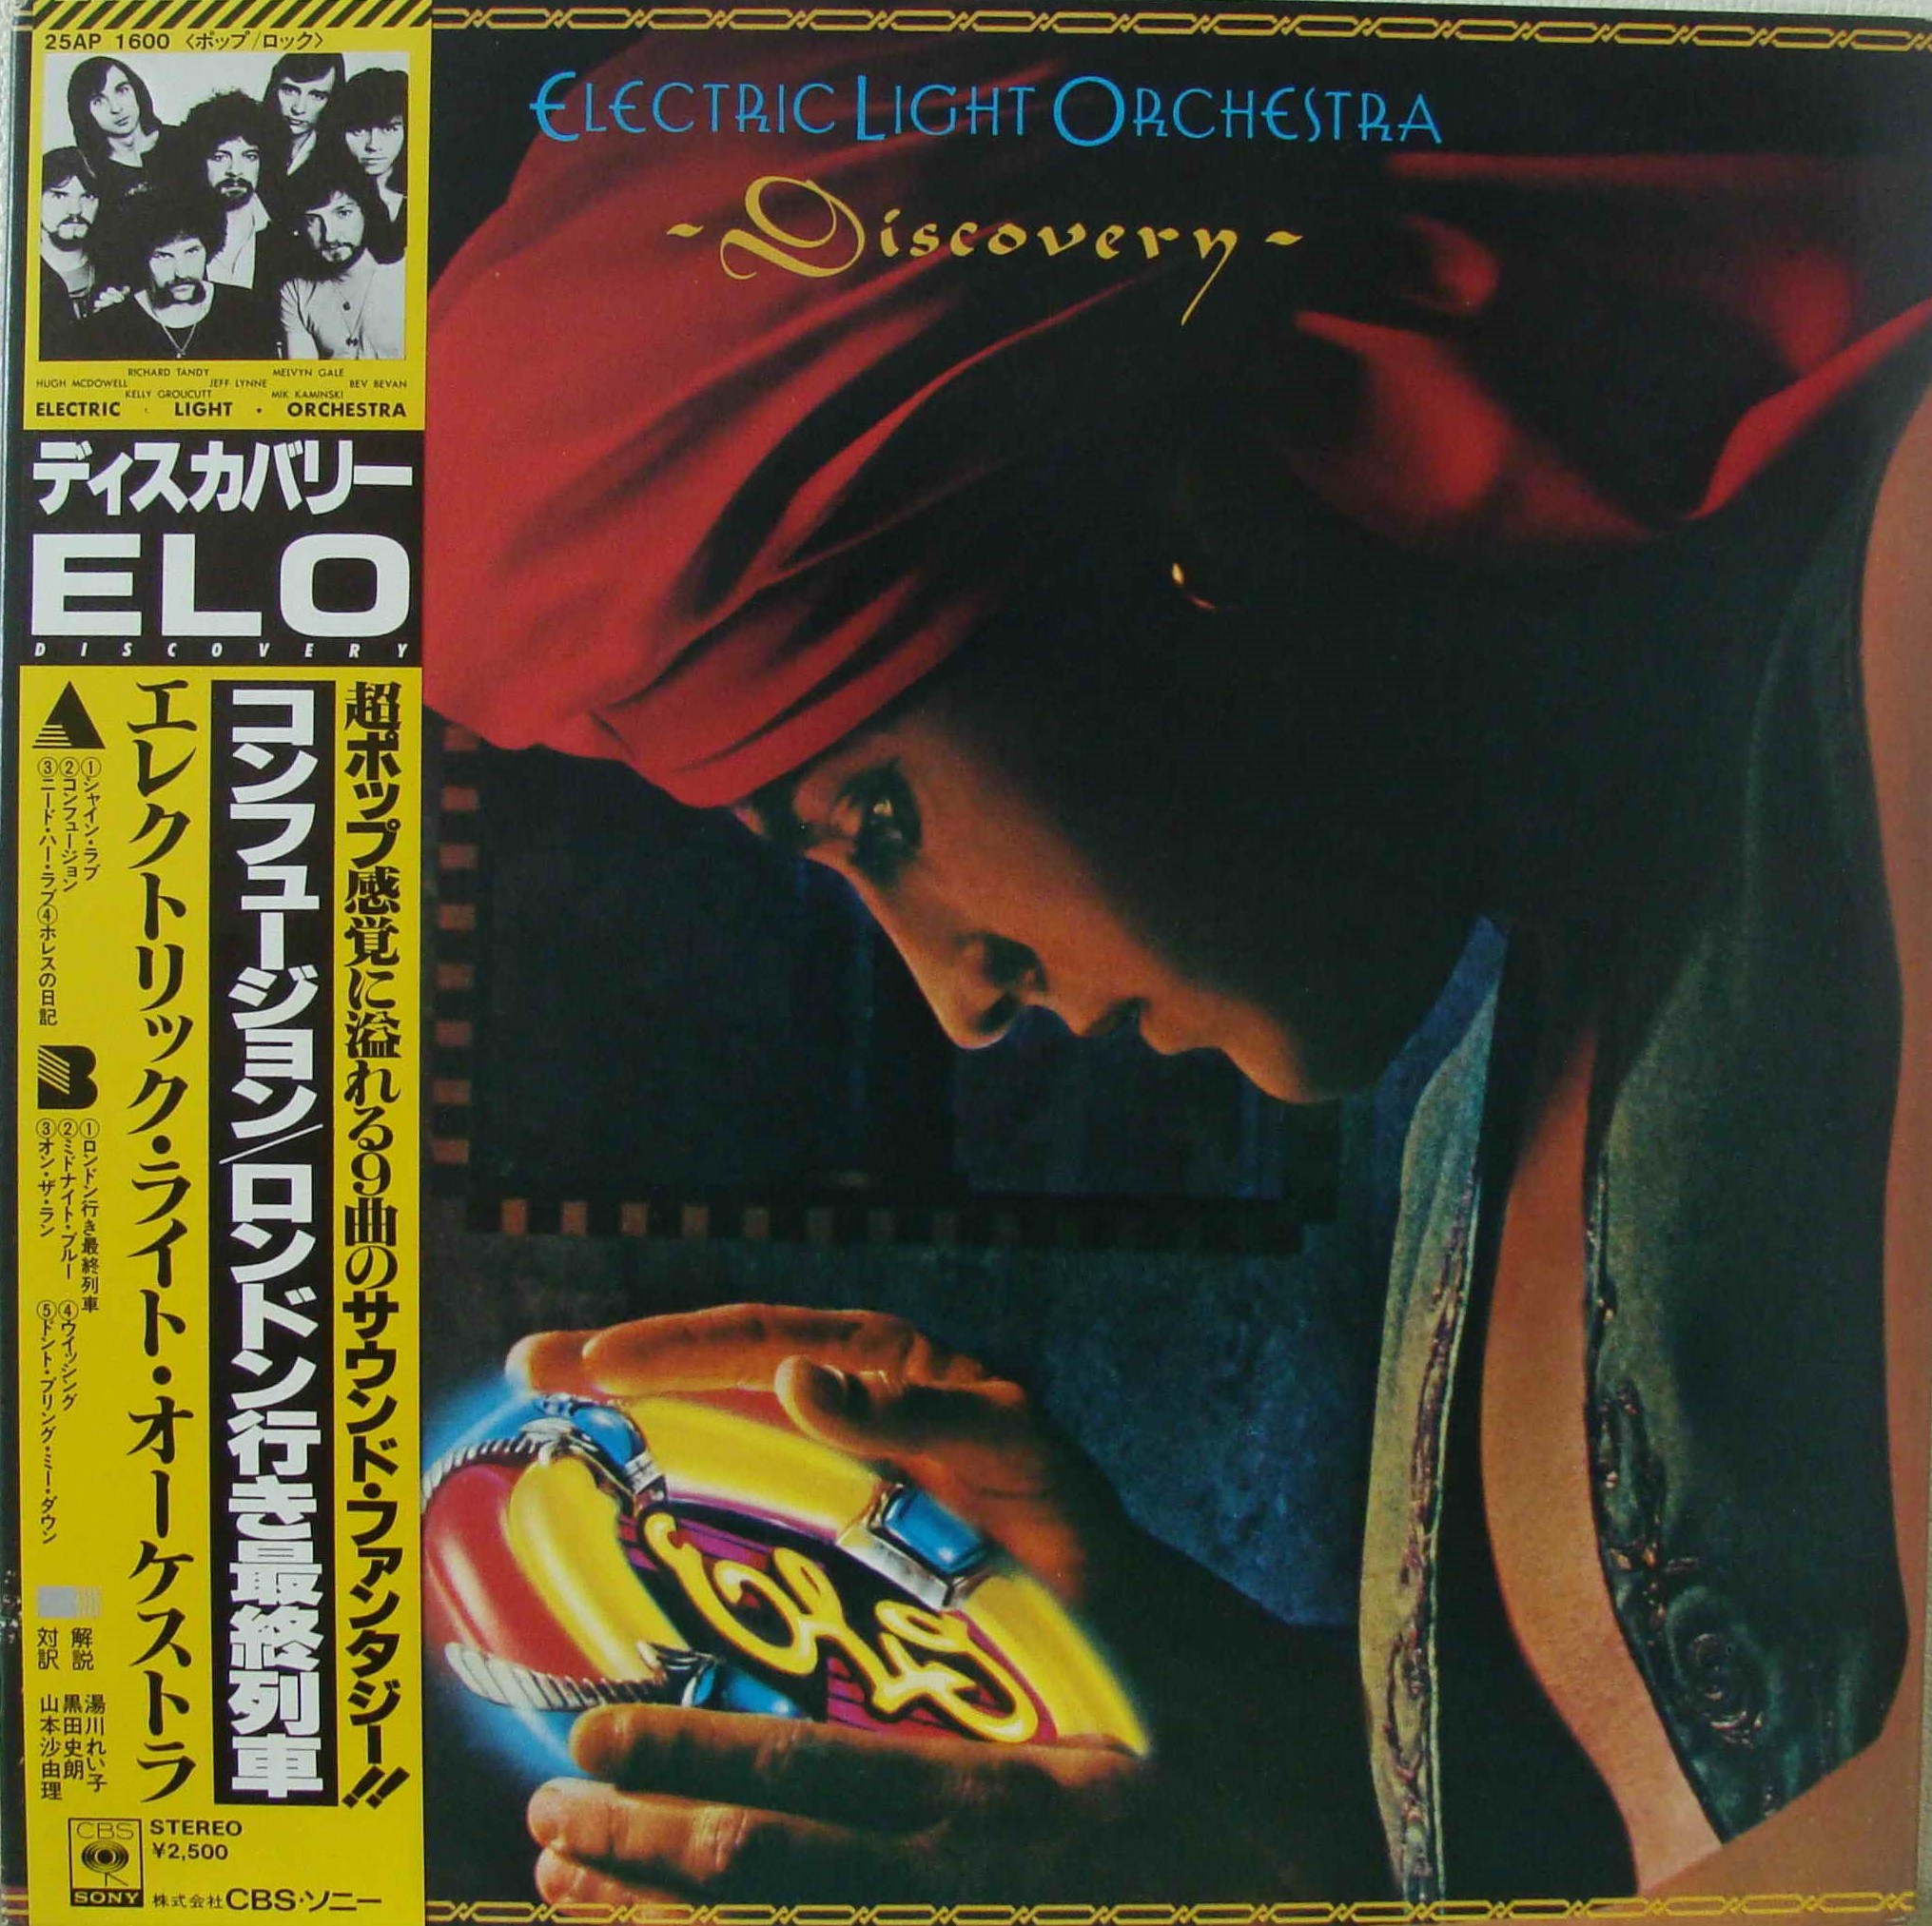 Ело дискавери. Electric Light Orchestra Discovery 1979. Elo Discovery 1979 LP. Electric Light Orchestra Discovery LP. Discovery Electric Light Orchestra обложка.